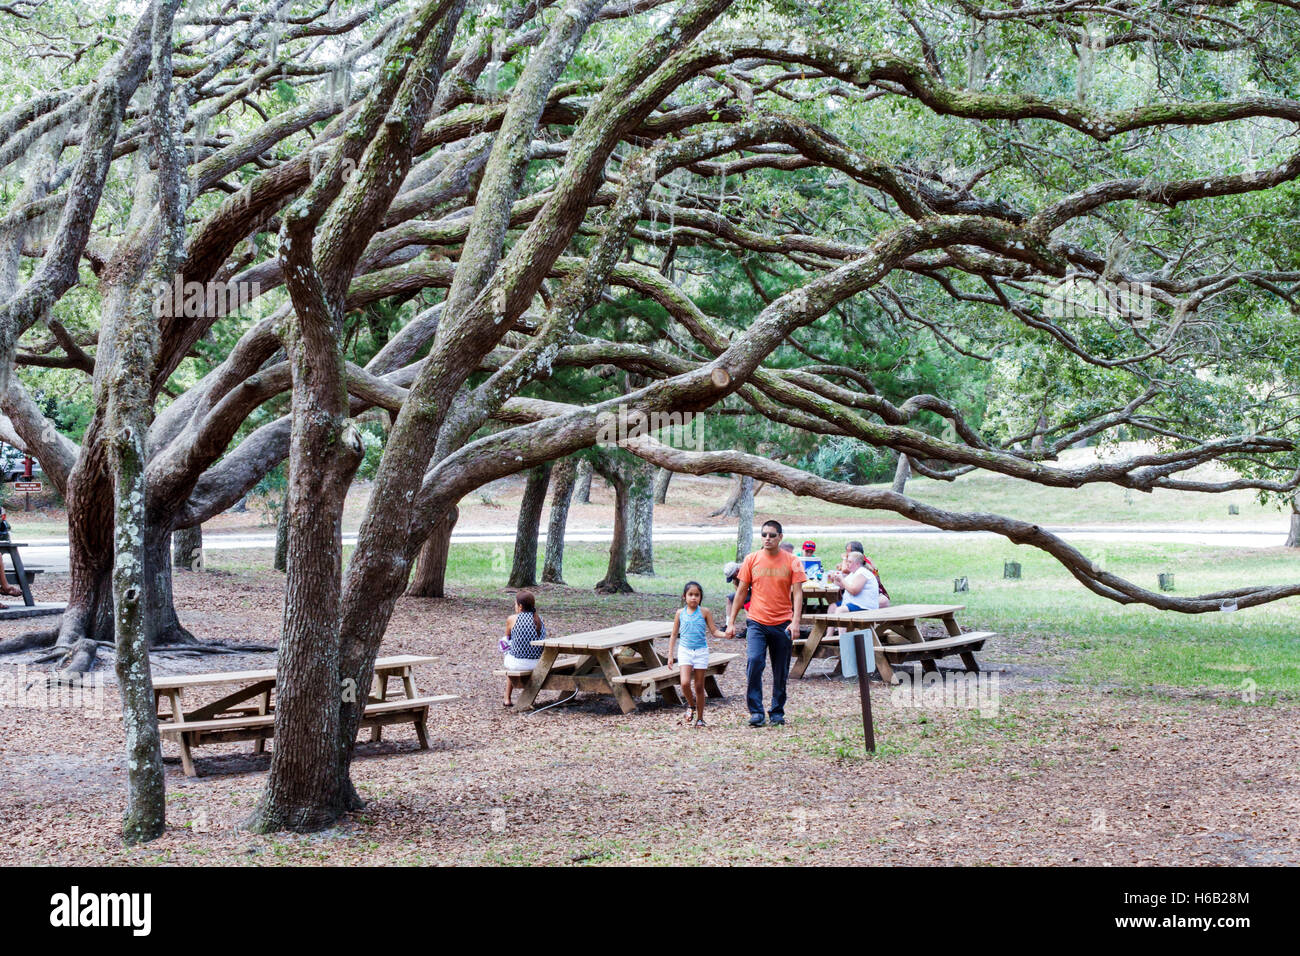 St. Saint Augustine Florida,Fort Matanzas National Monument,park,Matanzas Inlet water River water,live oak,trees,Hispanic Latin Latino ethnic immigran Stock Photo